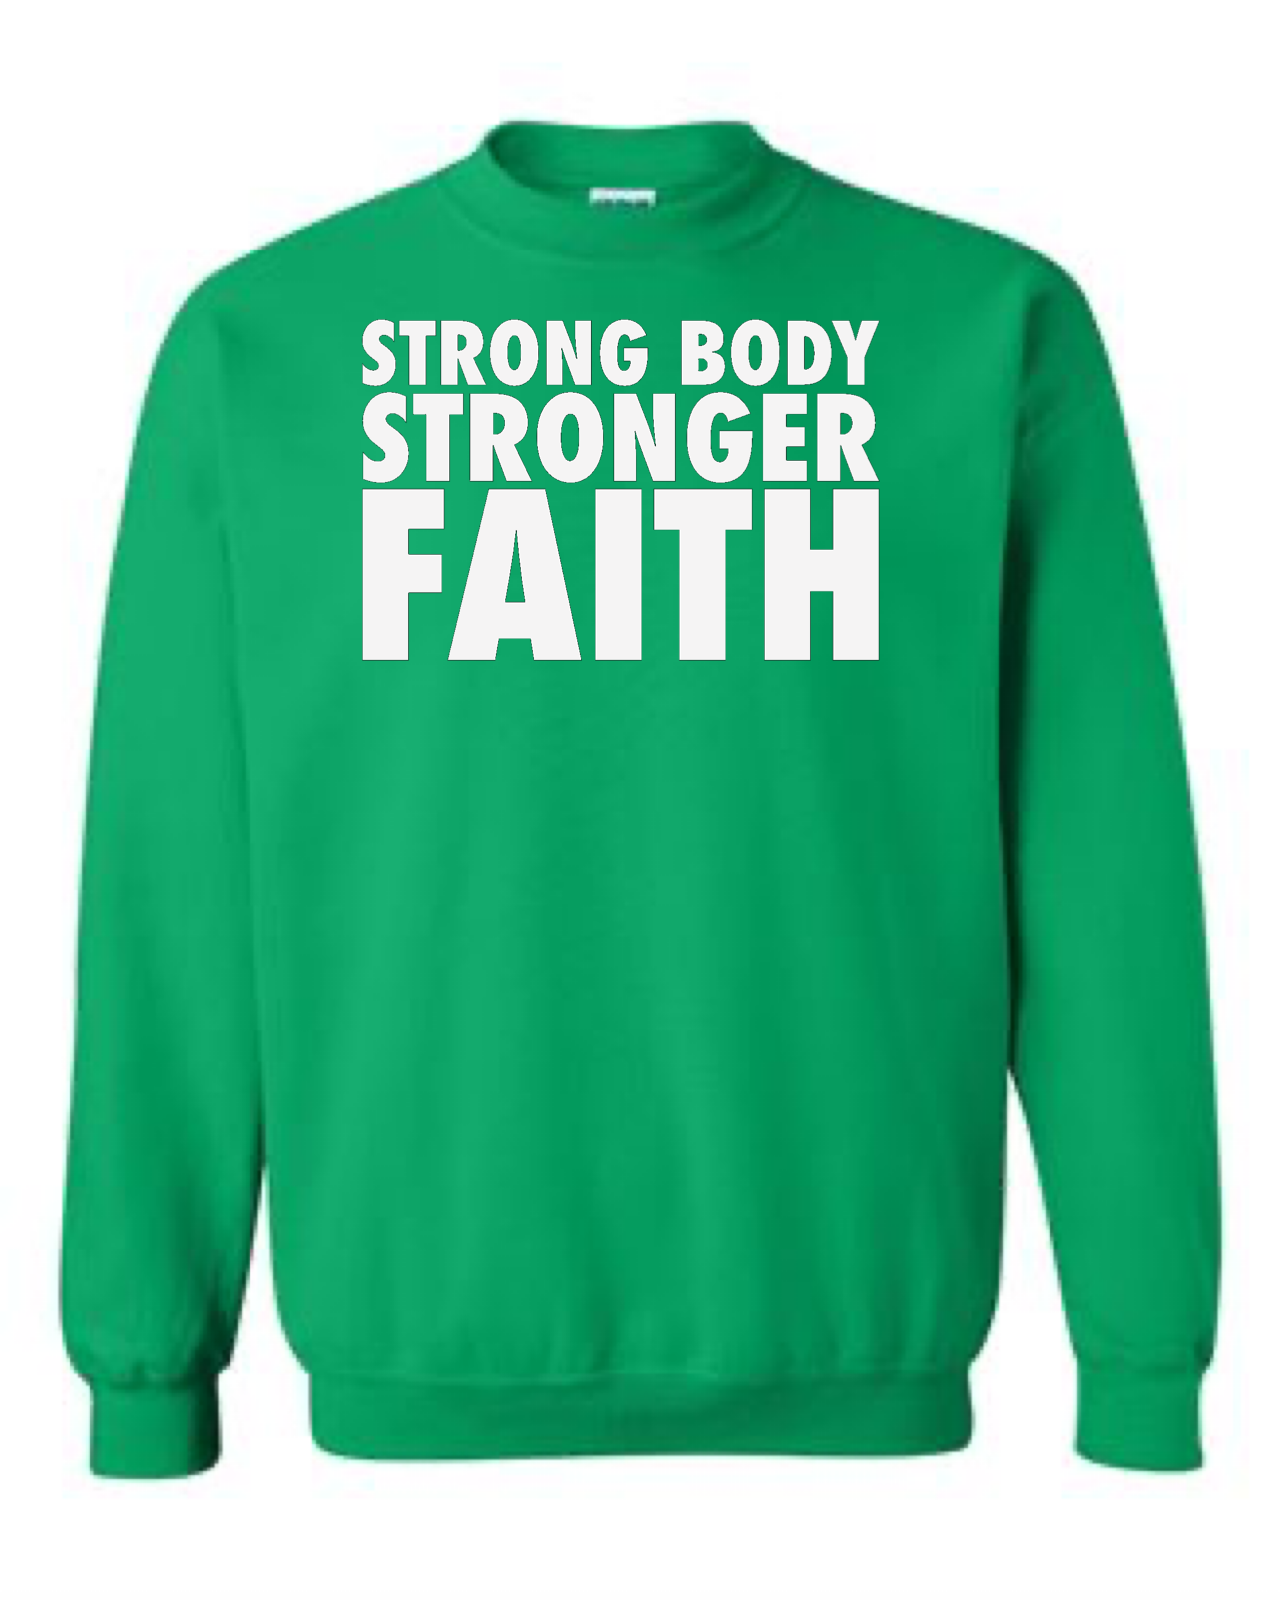 Strong Body Stronger Faith Crewneck Sweatshirt